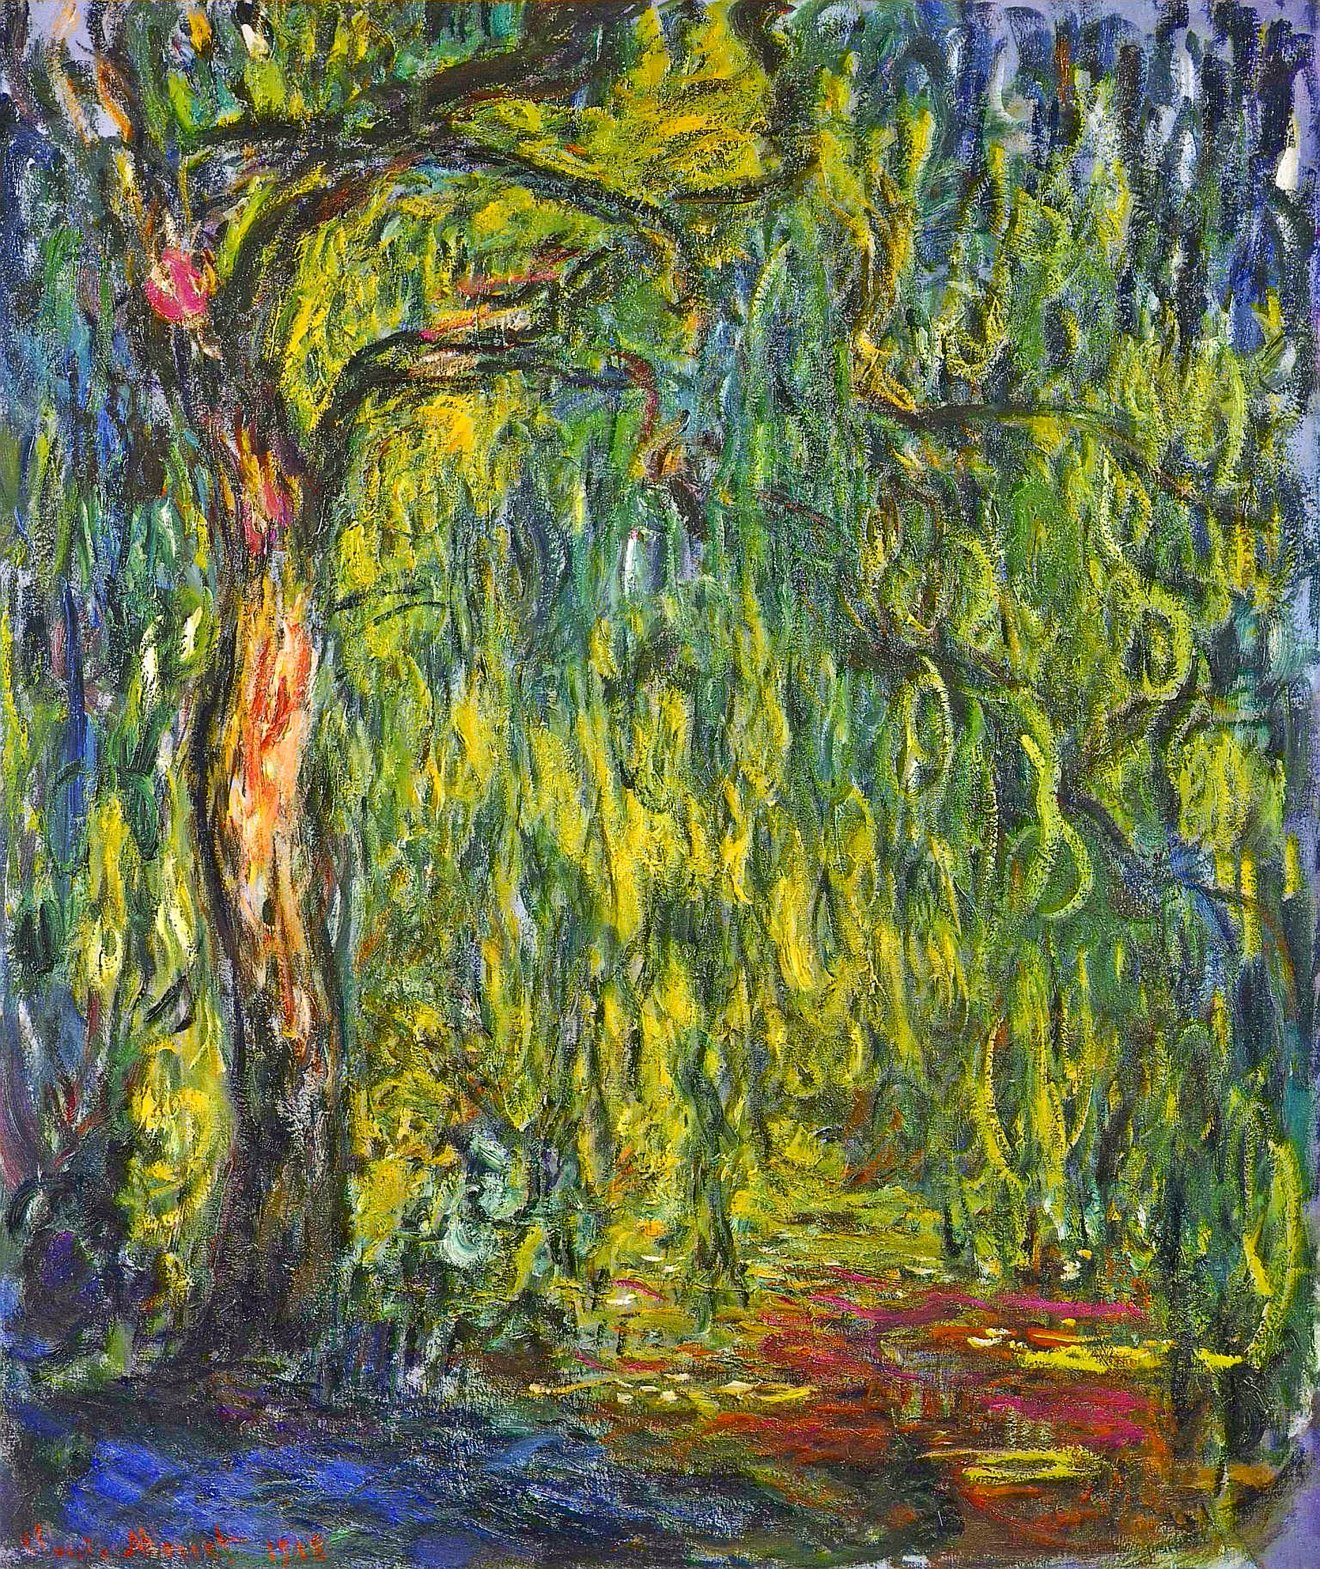 Claude+Monet-1840-1926 (670).jpg